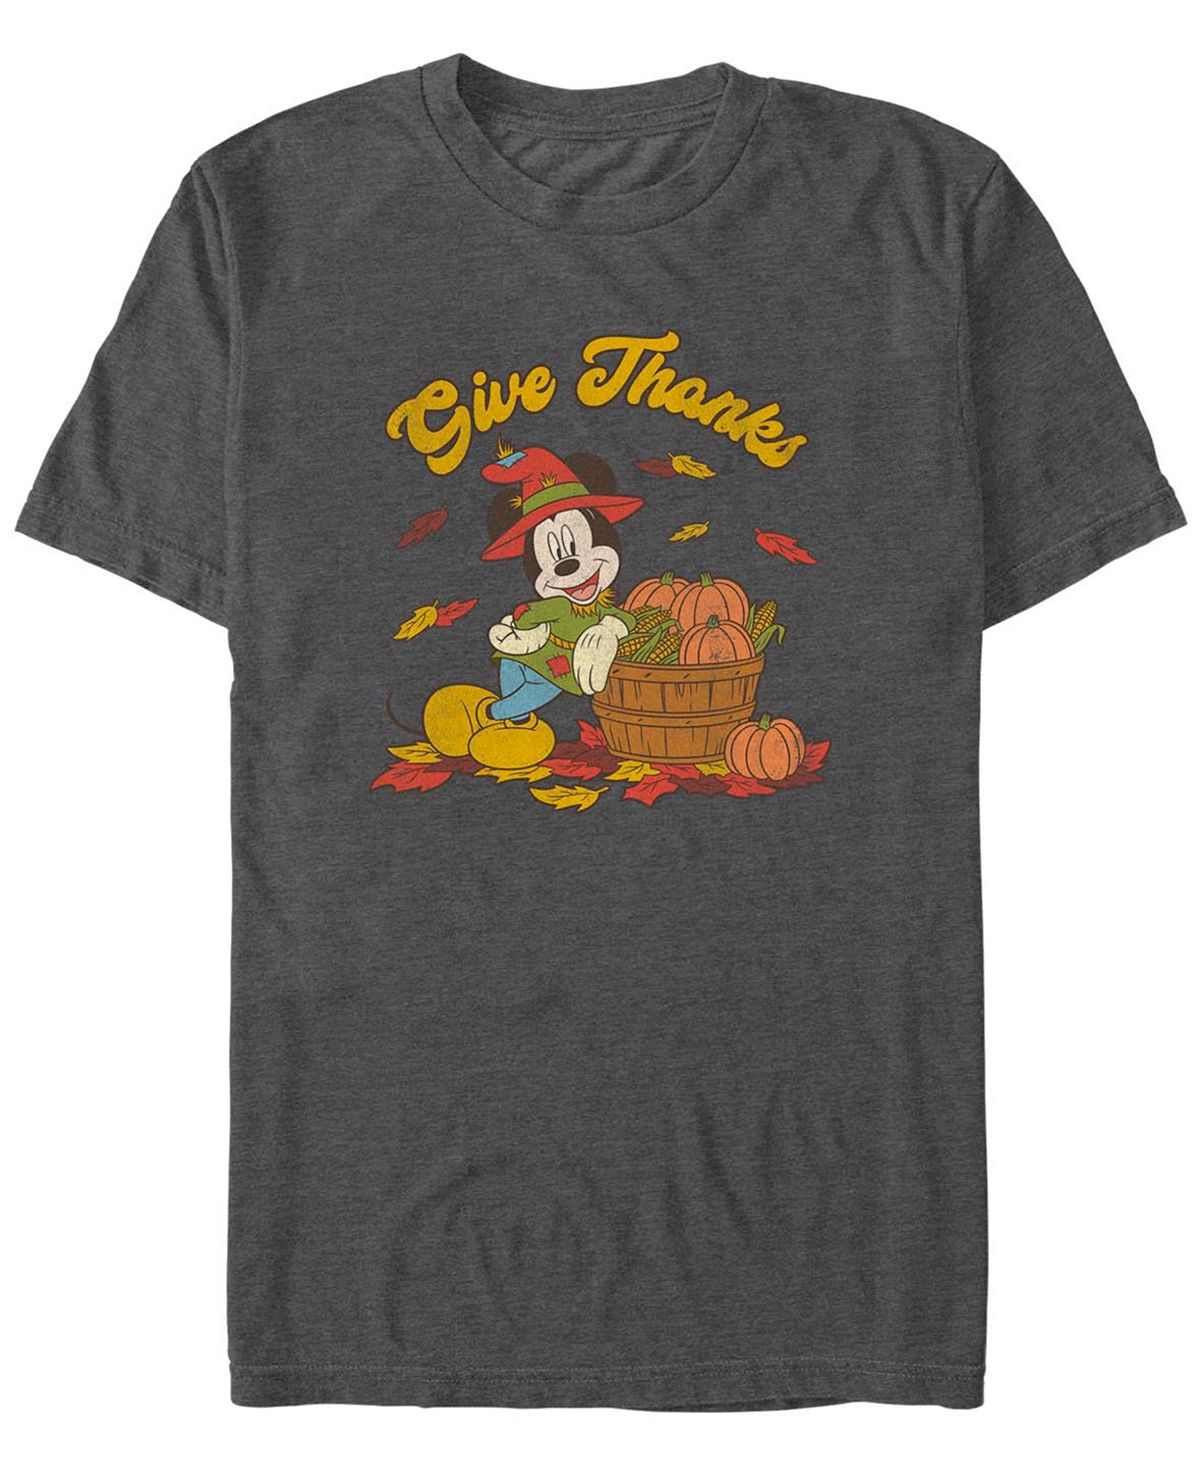 Мужская футболка с короткими рукавами mickey classic thankful mouse Fifth Sun, мульти гамбия 1997г персонажи уолта диснея минни маус мл